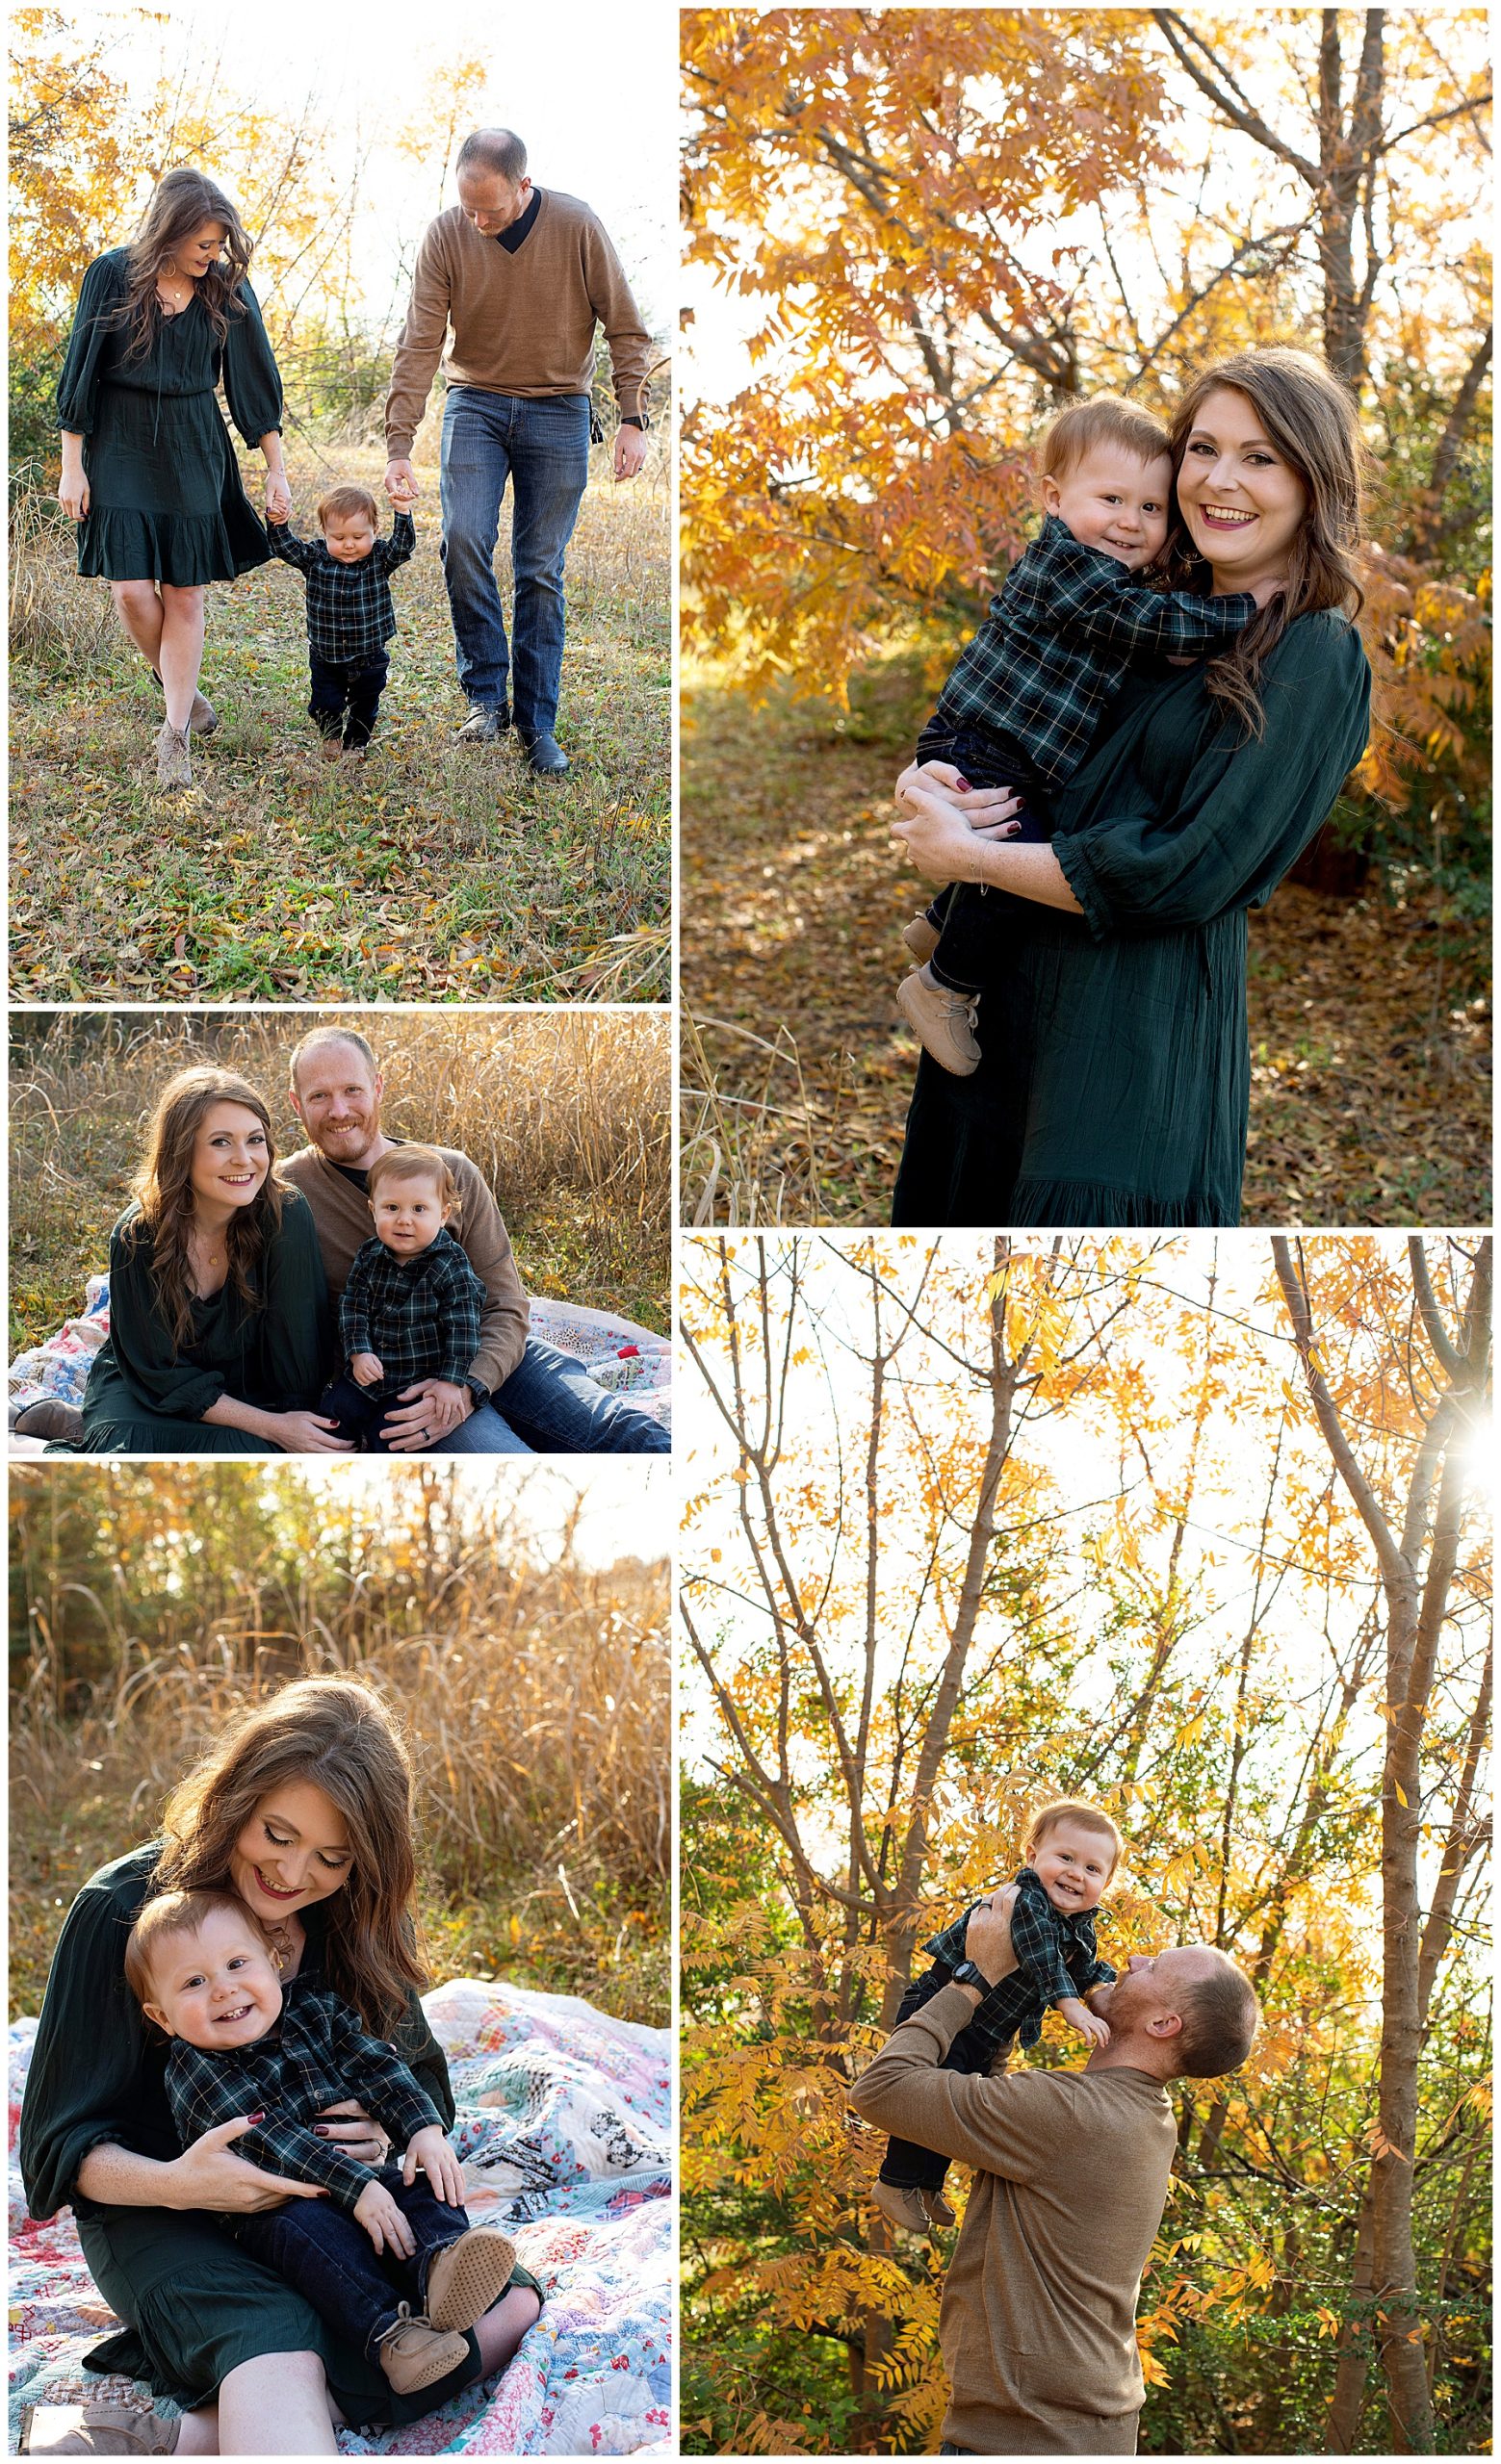 Dallas Family photos in fall colors.jpg